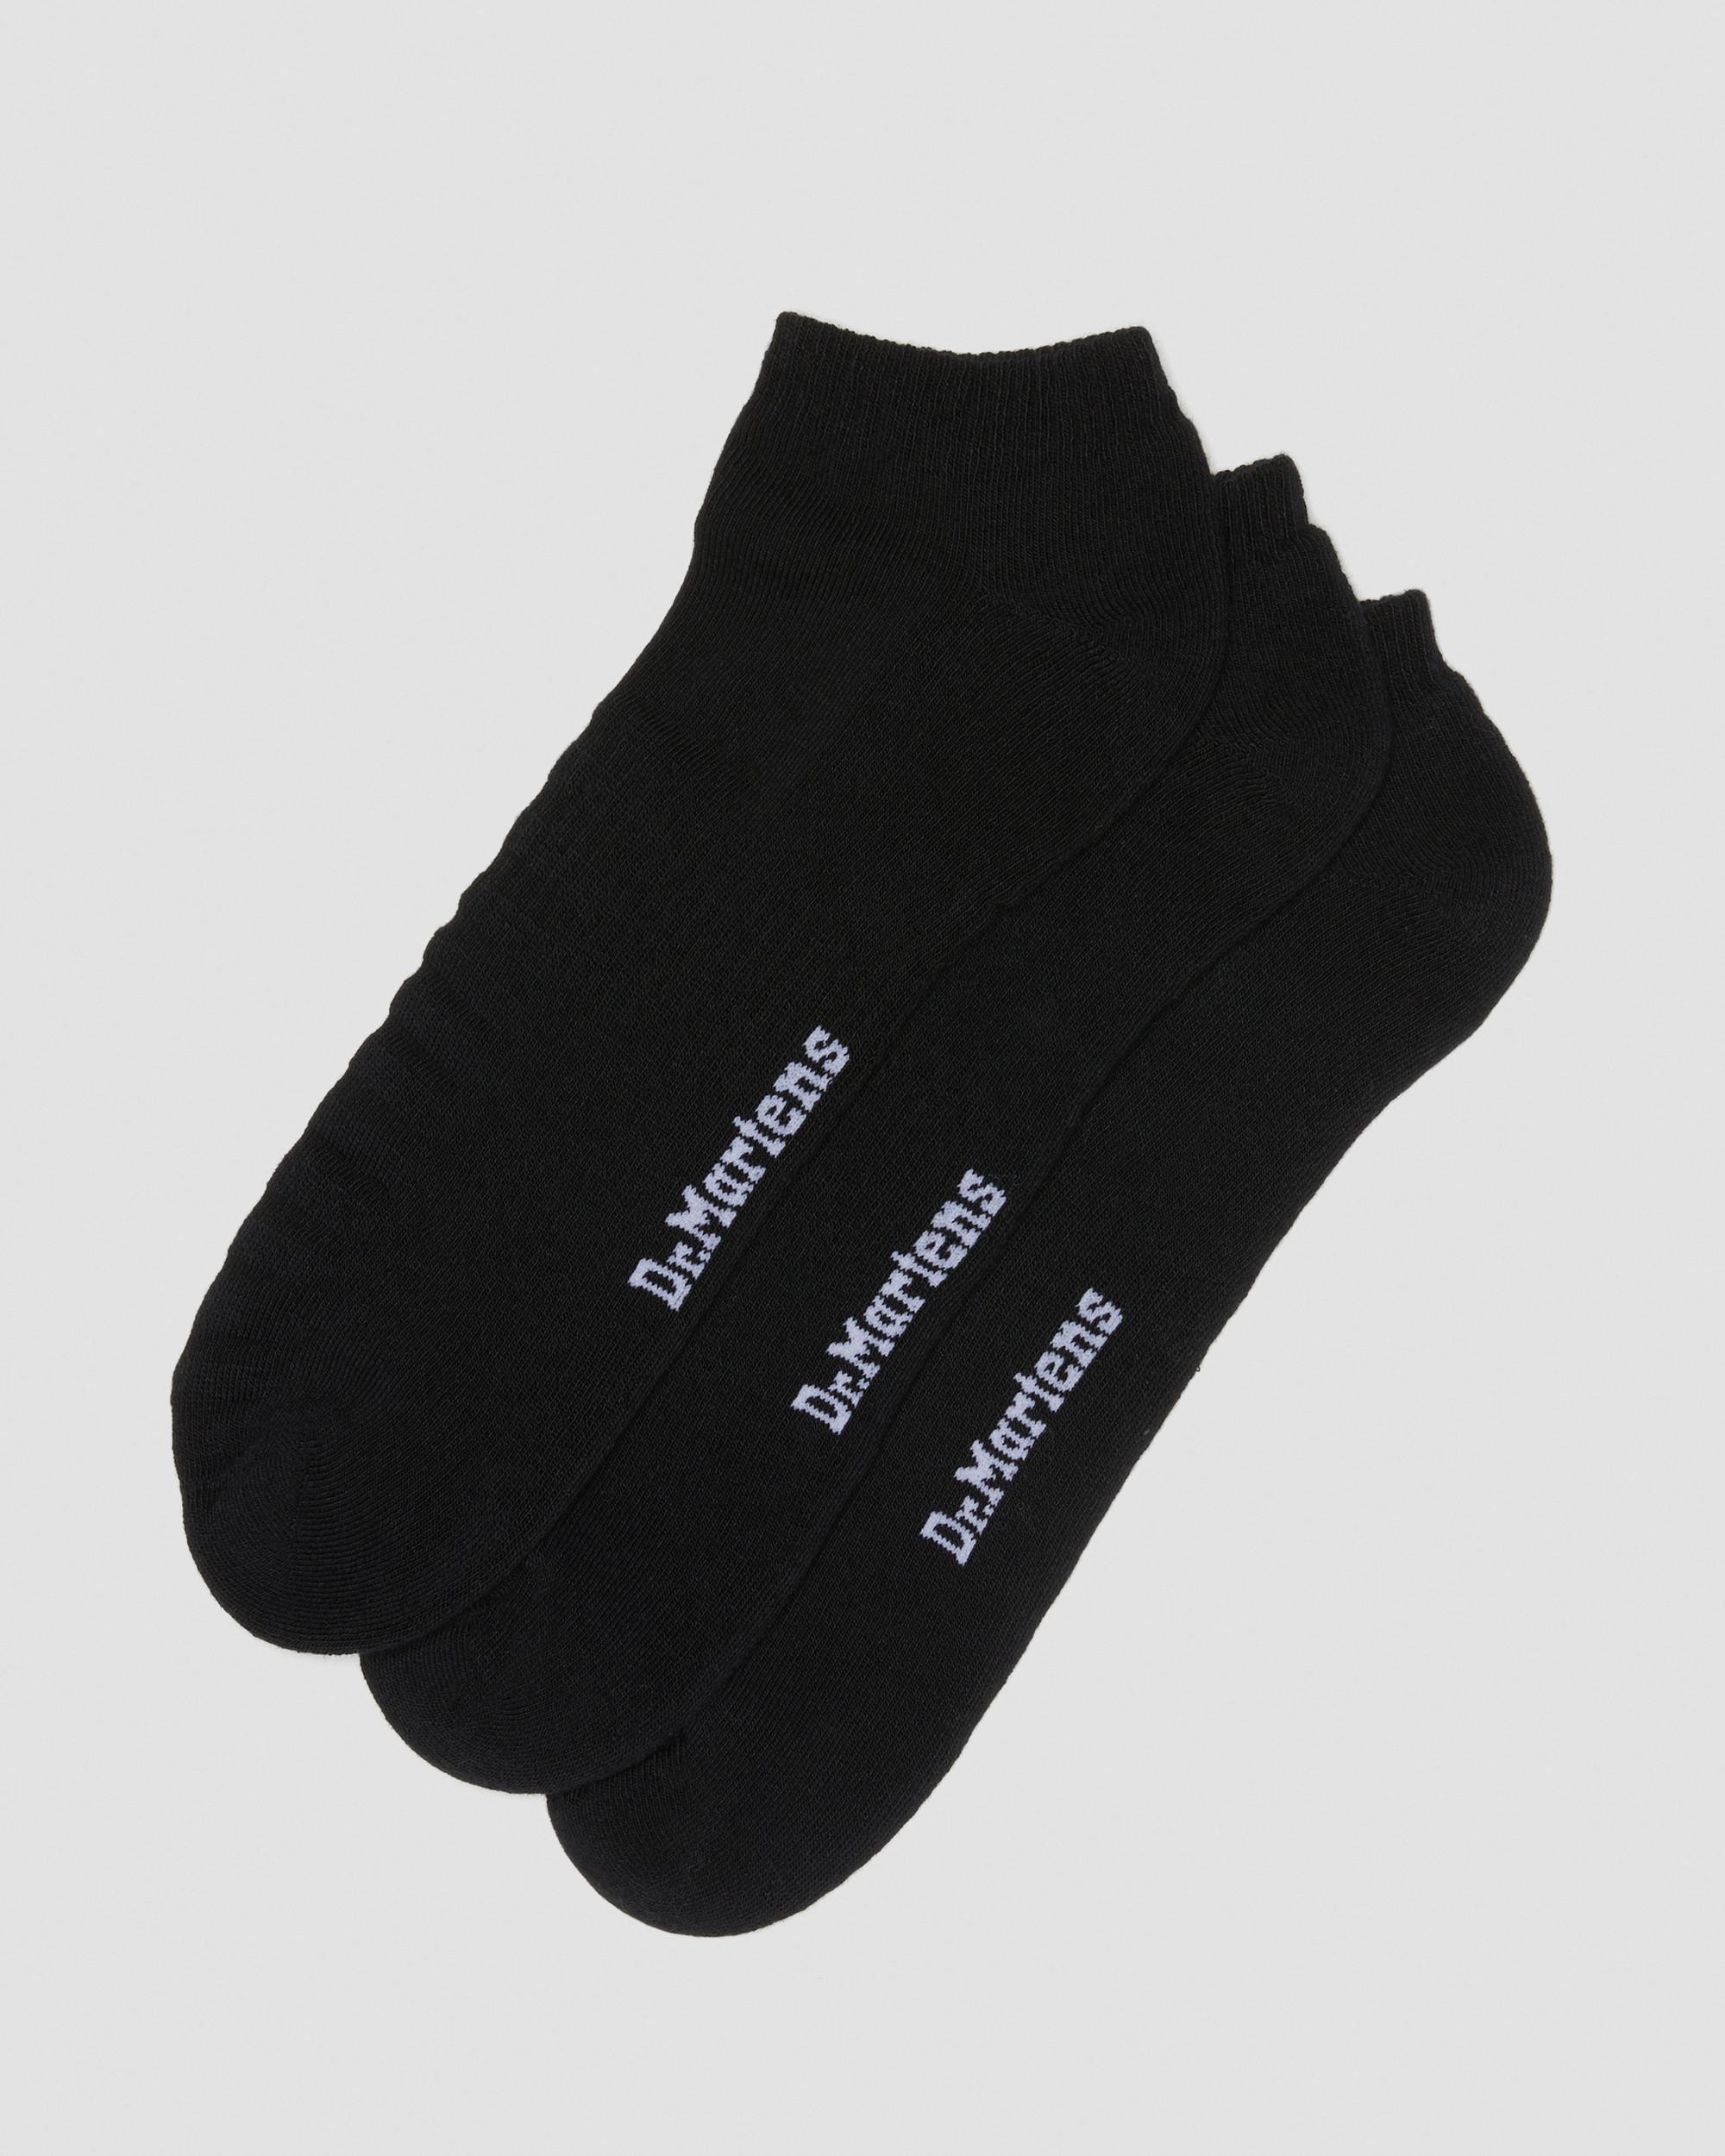 Double Doc Organic Cotton Blend Short 3-Pack Socks in Black